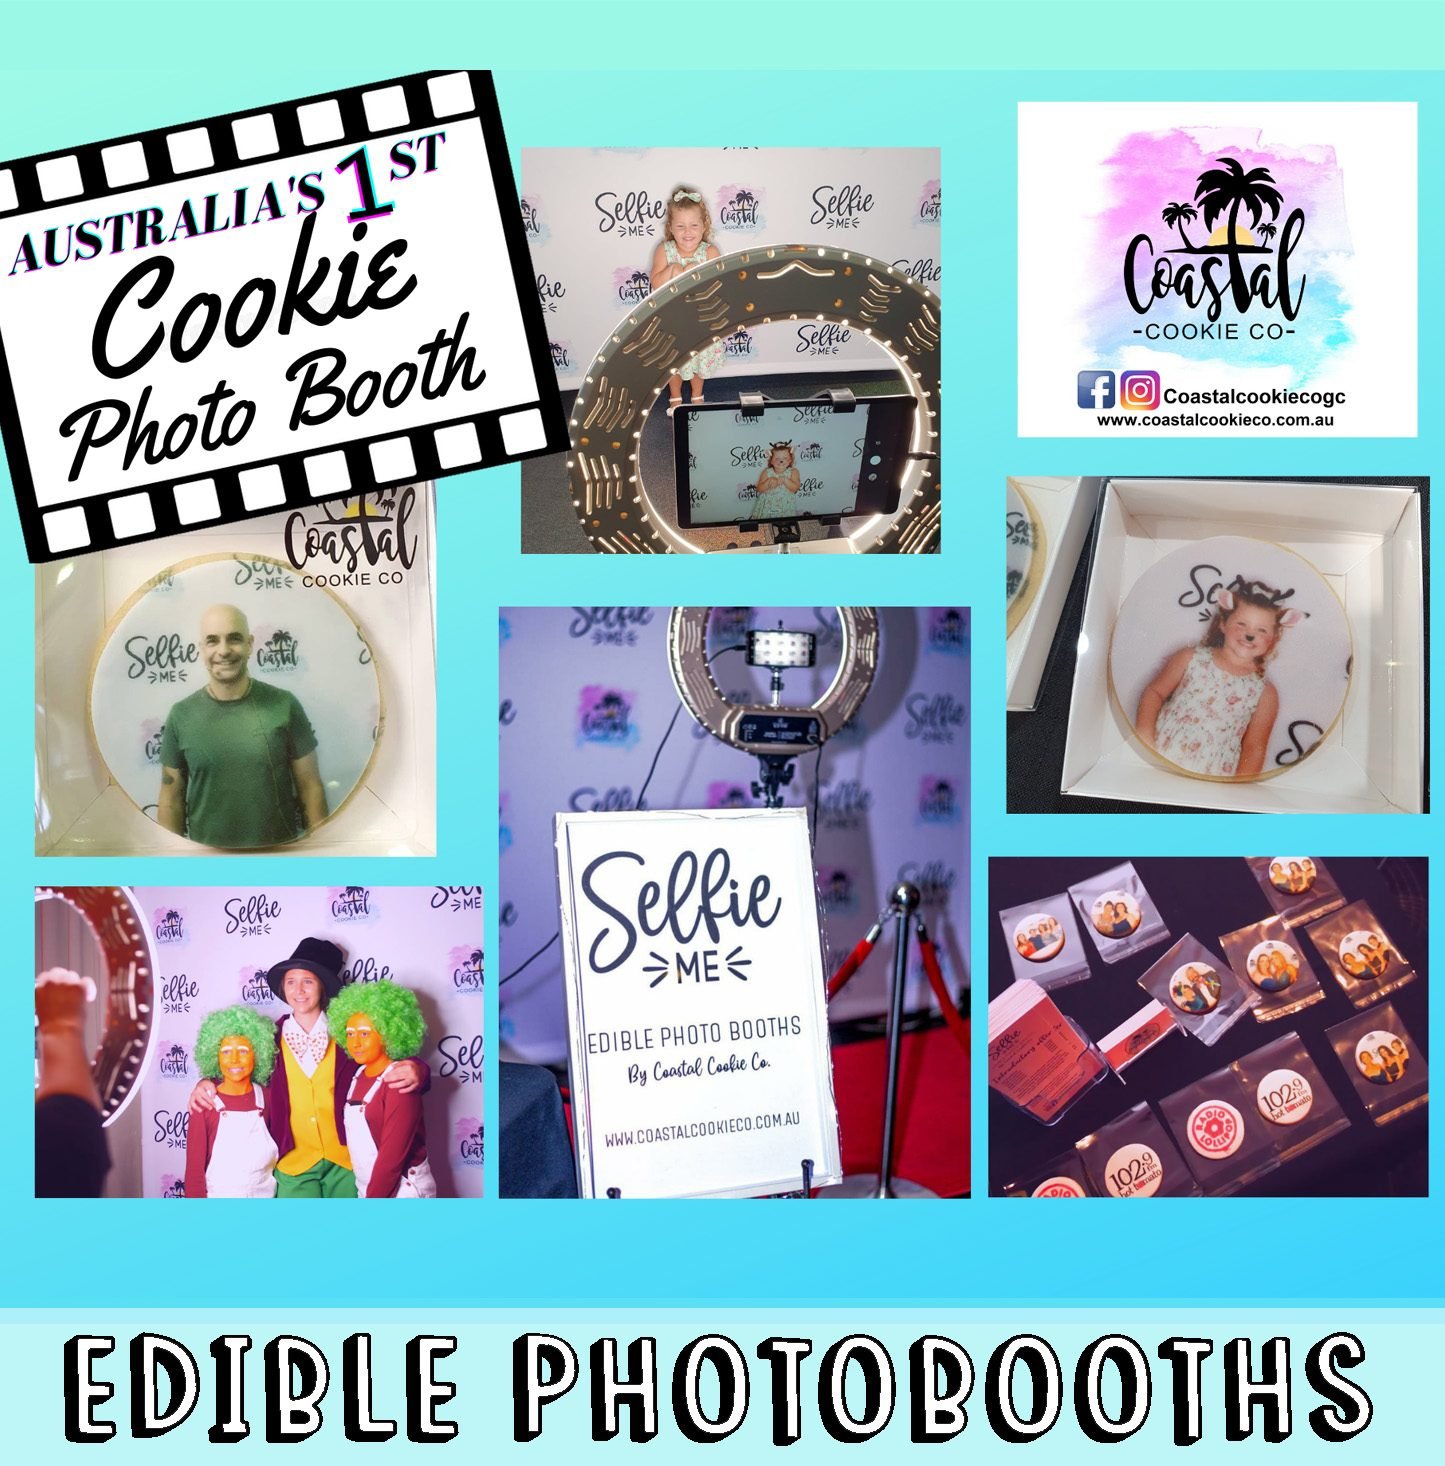 Australia's edible photo booth